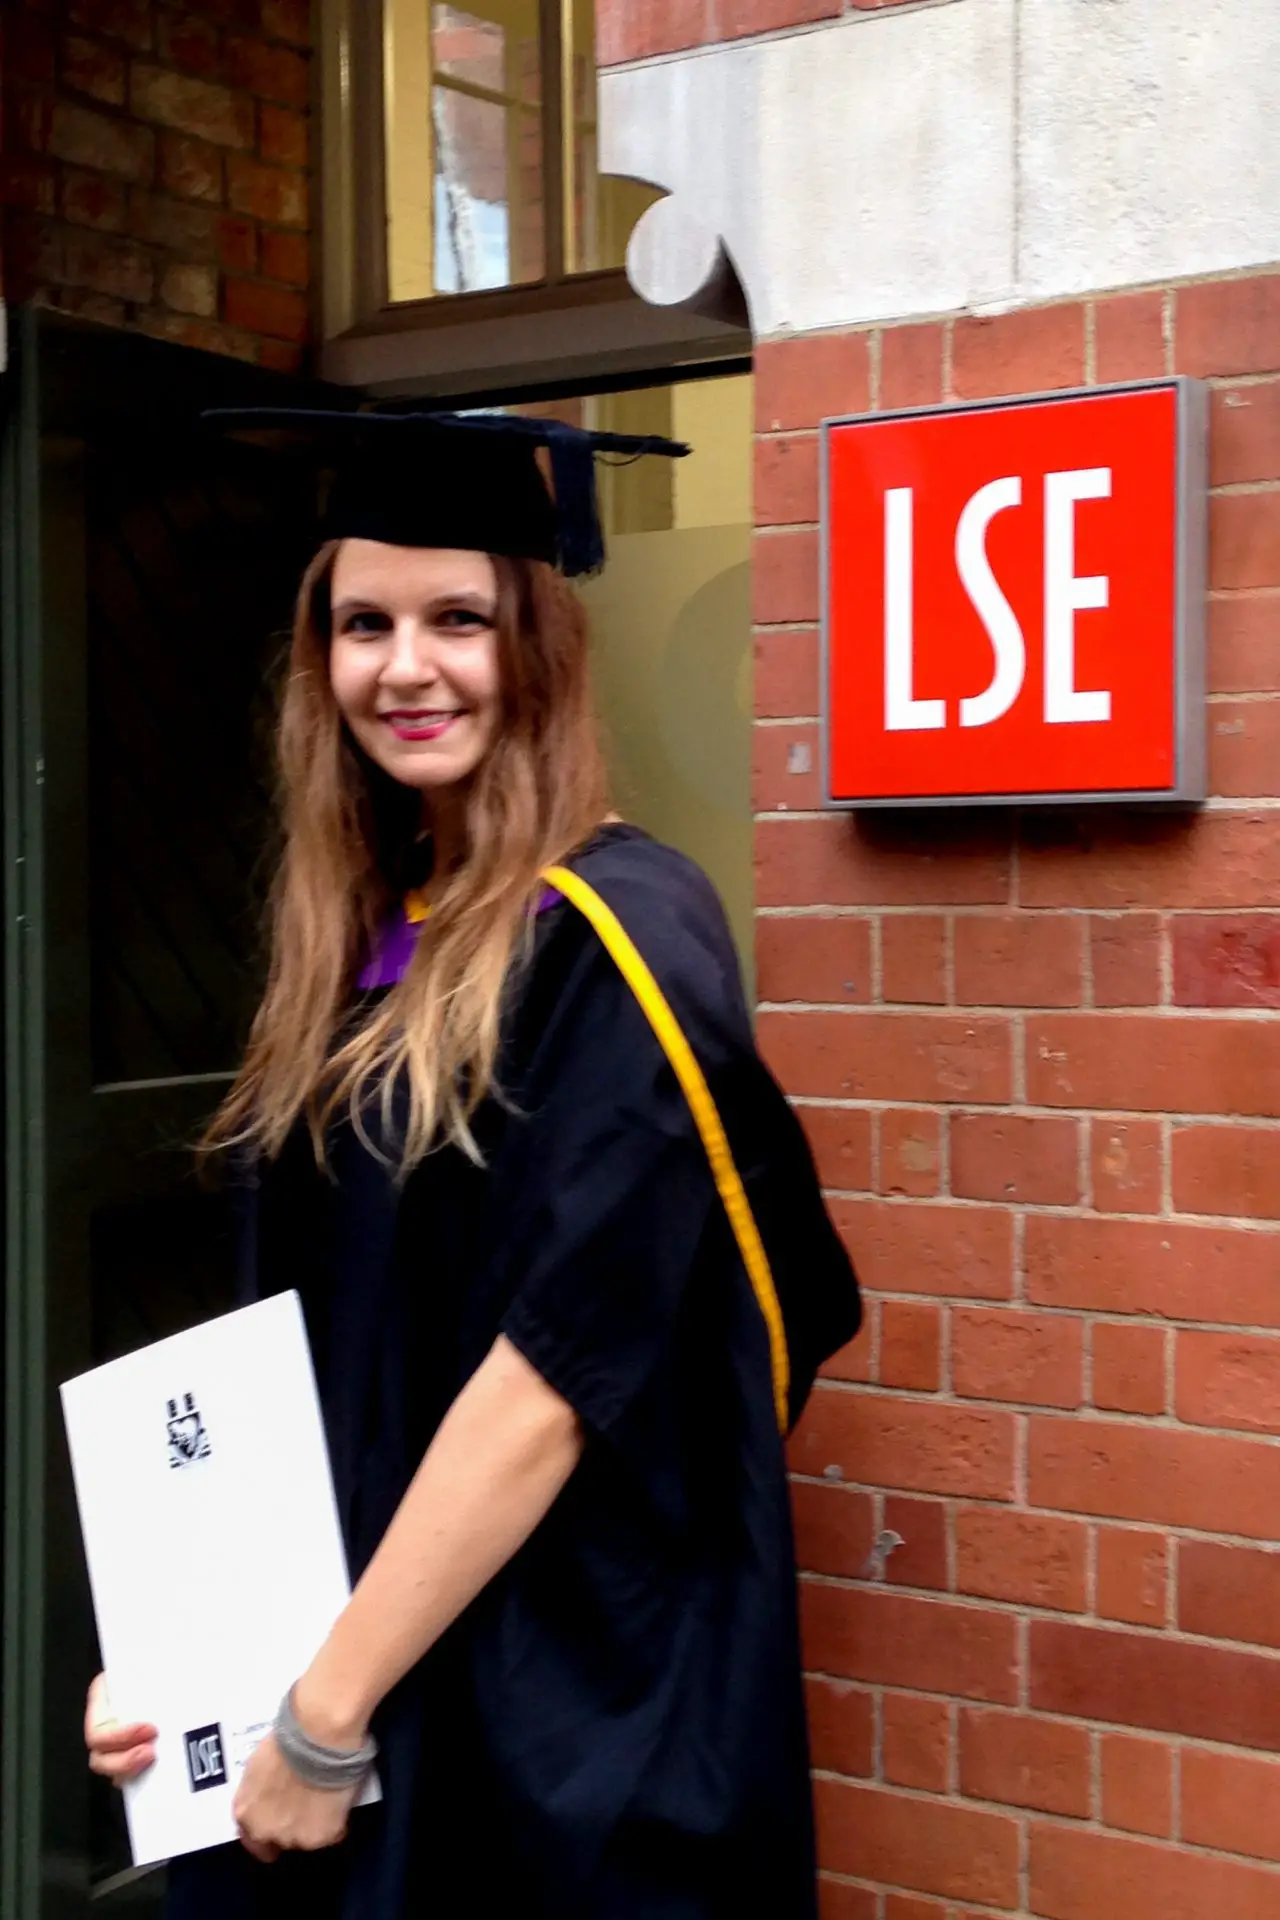 LSE graduation - Experiencing the Globe